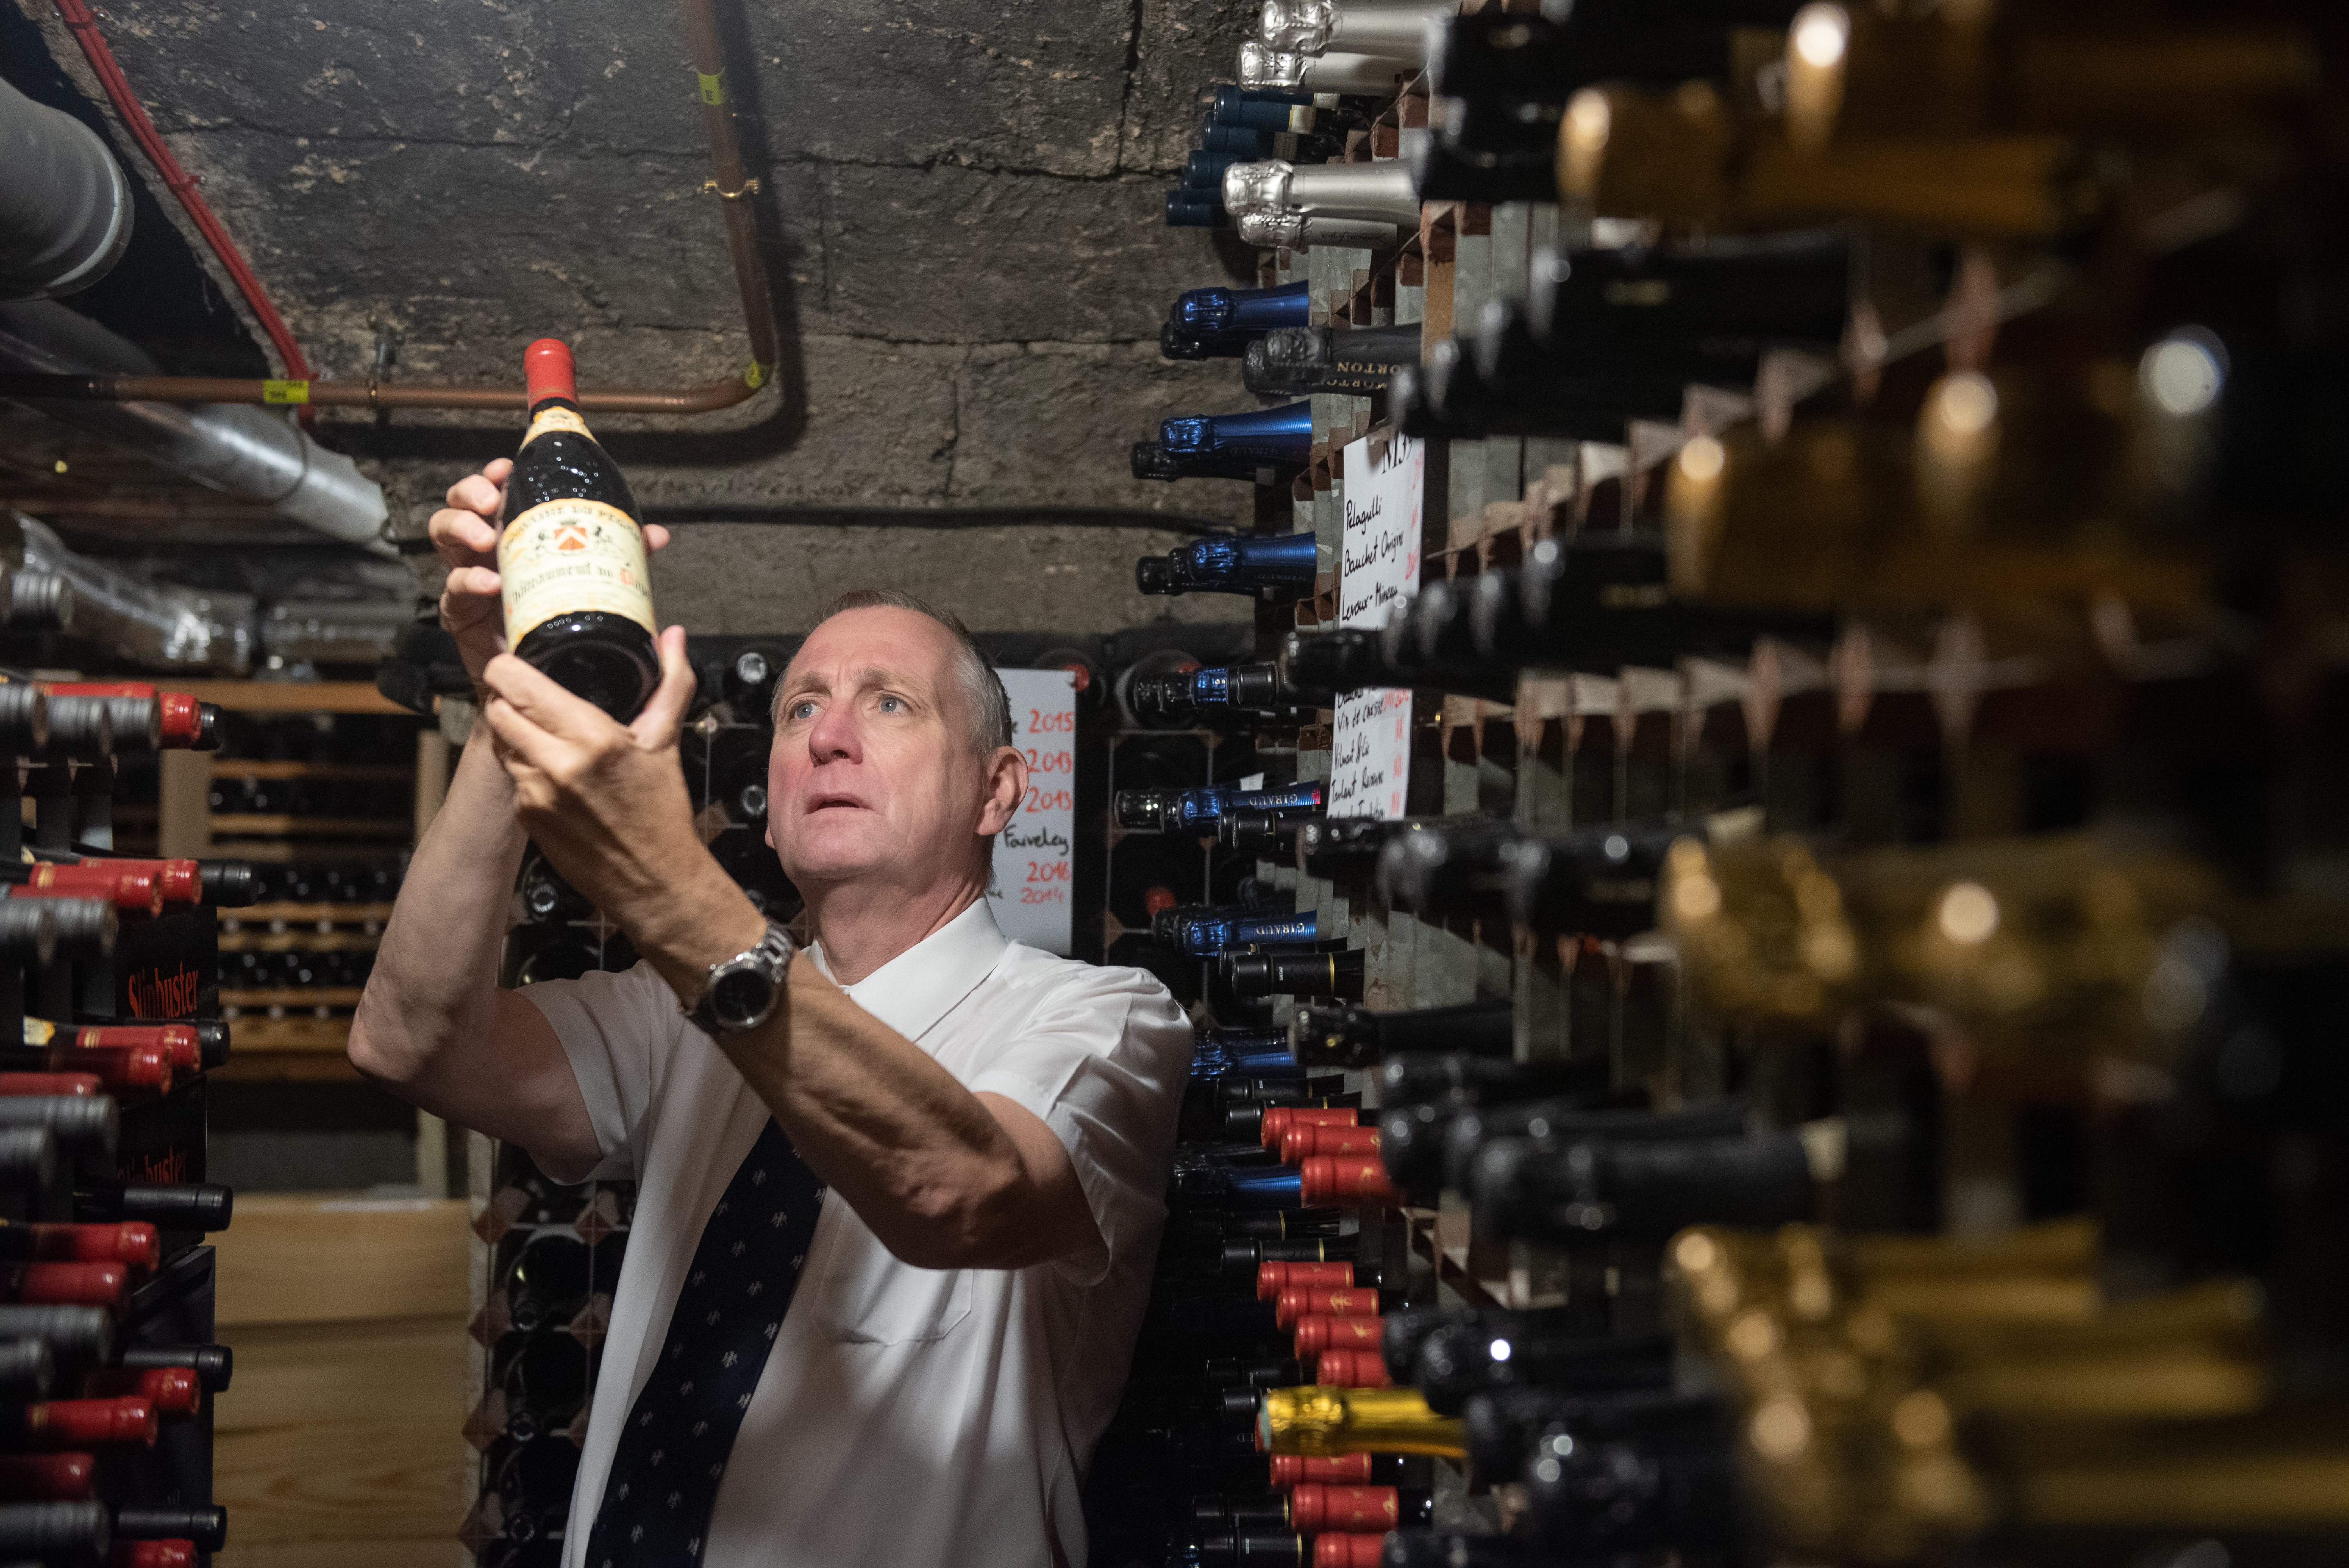 Robert Saberton-Haynes in the wine cellar